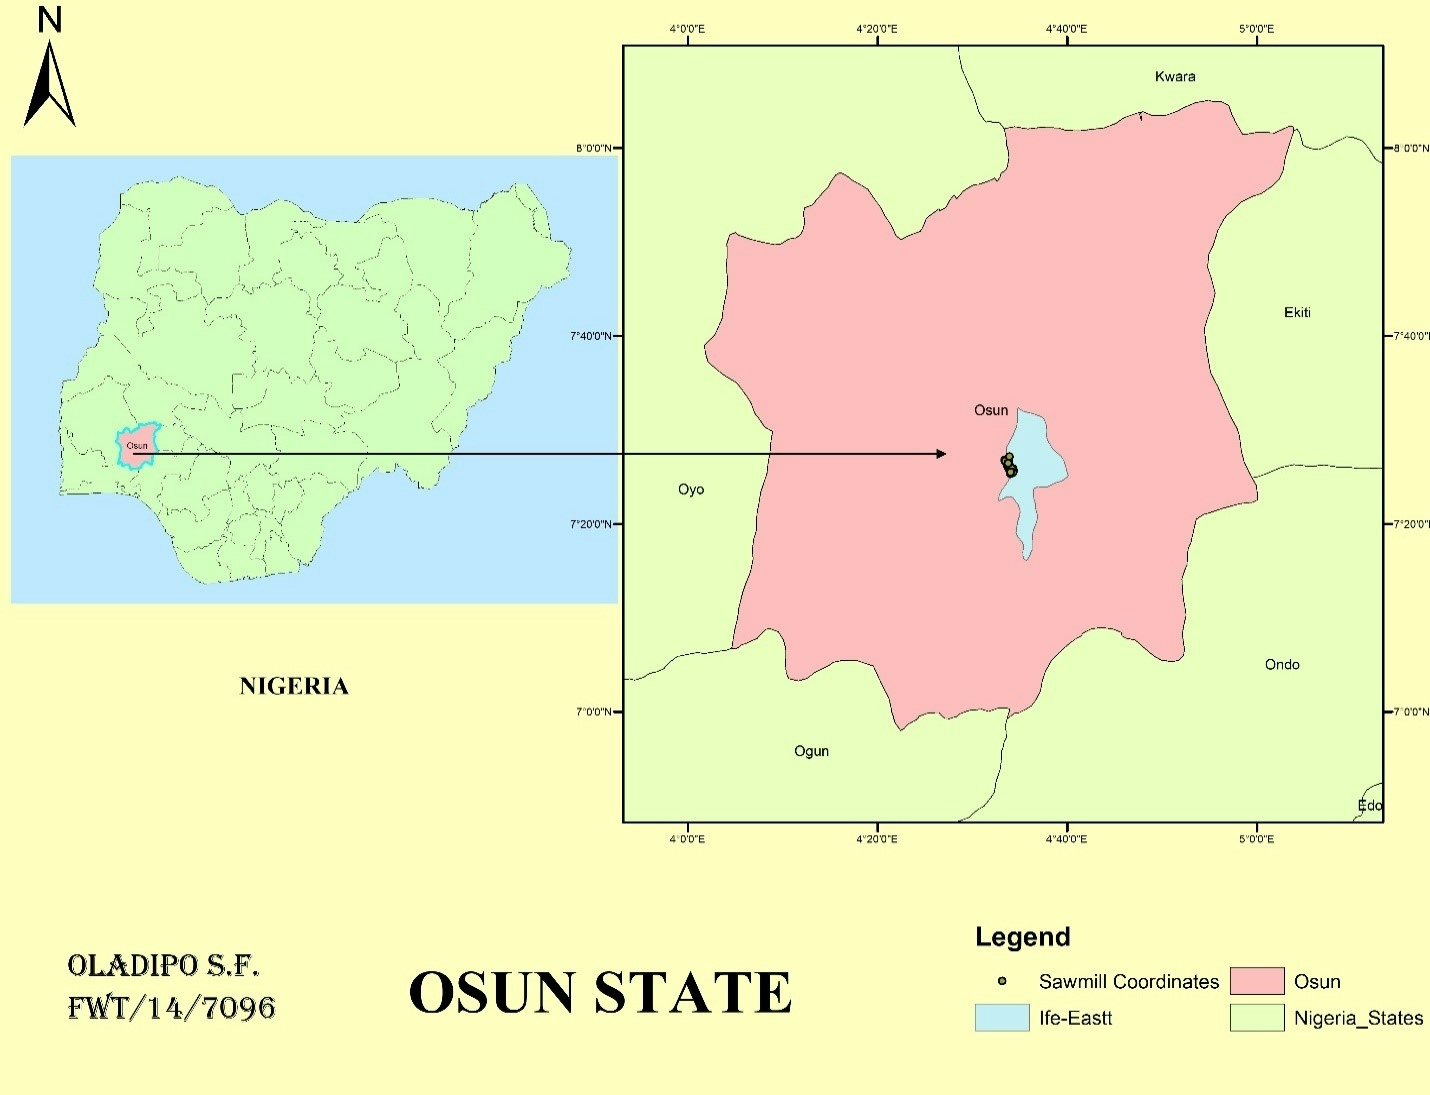 Map of Ife-East LGA of Osun State